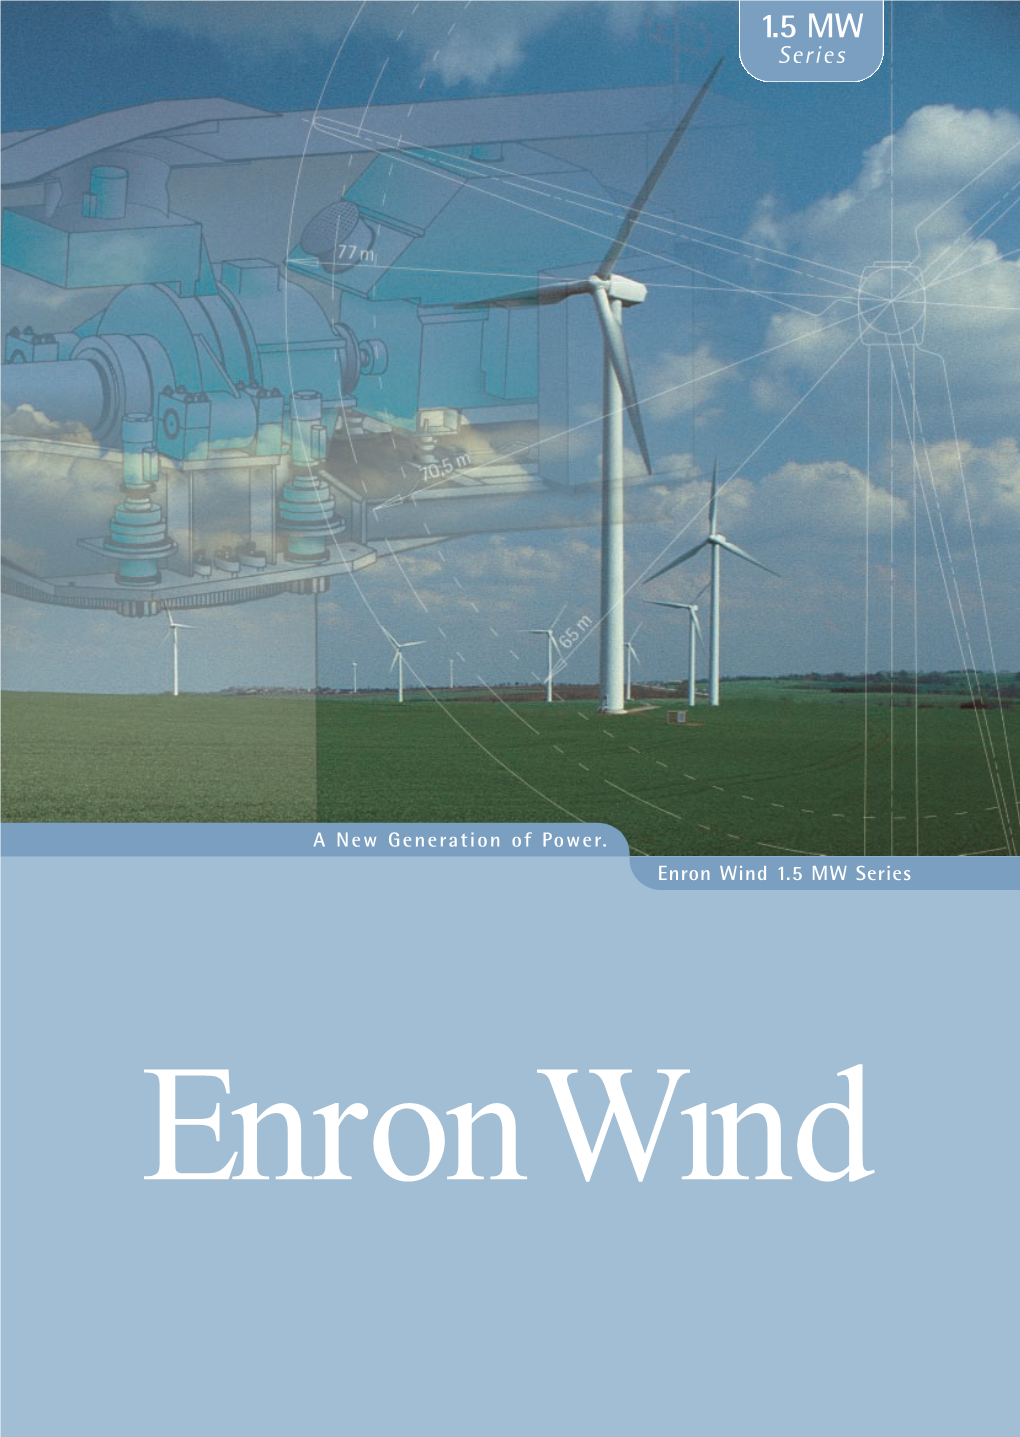 Enron Wind 1.5 MW Series Wind Turbines